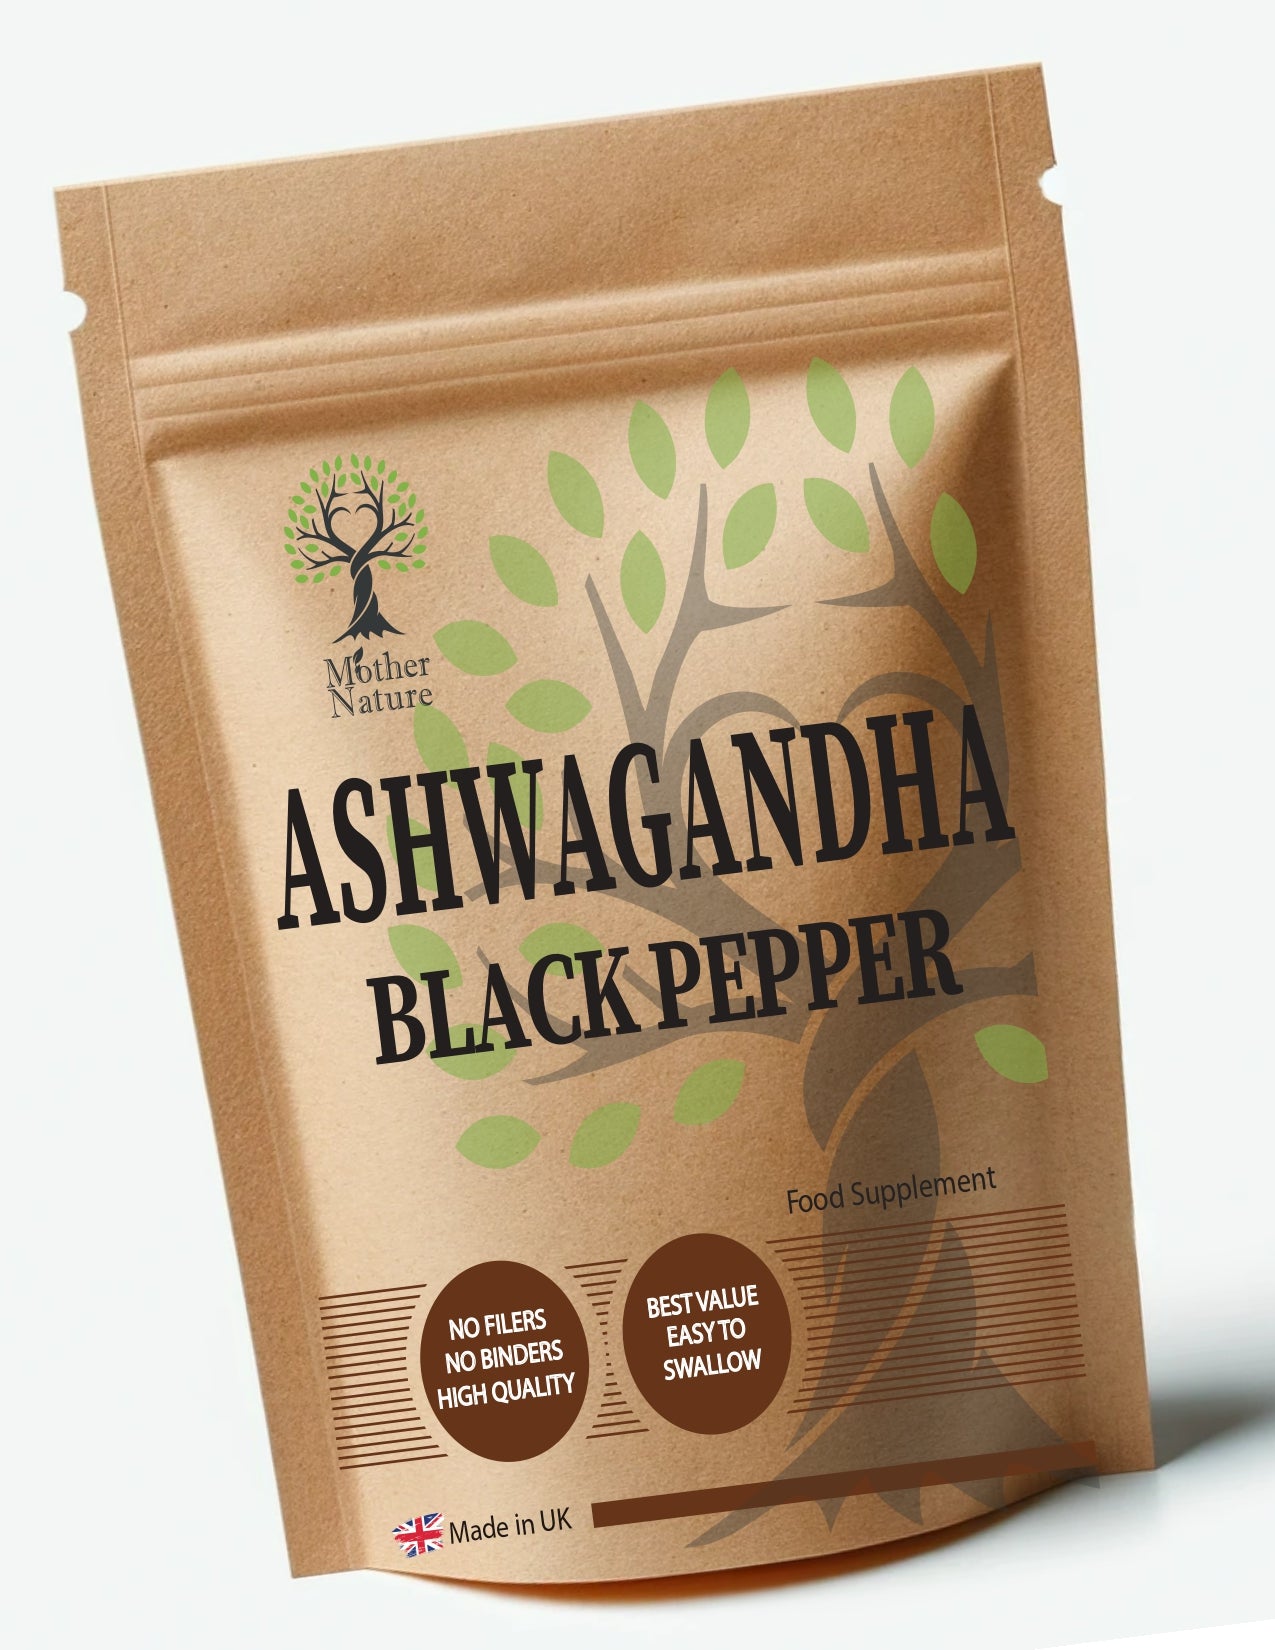 Ashwagandha Black Pepper Mix 600mg Natural Ashwagandha Capsules Root Extract Strong Effective Vegan Supplements